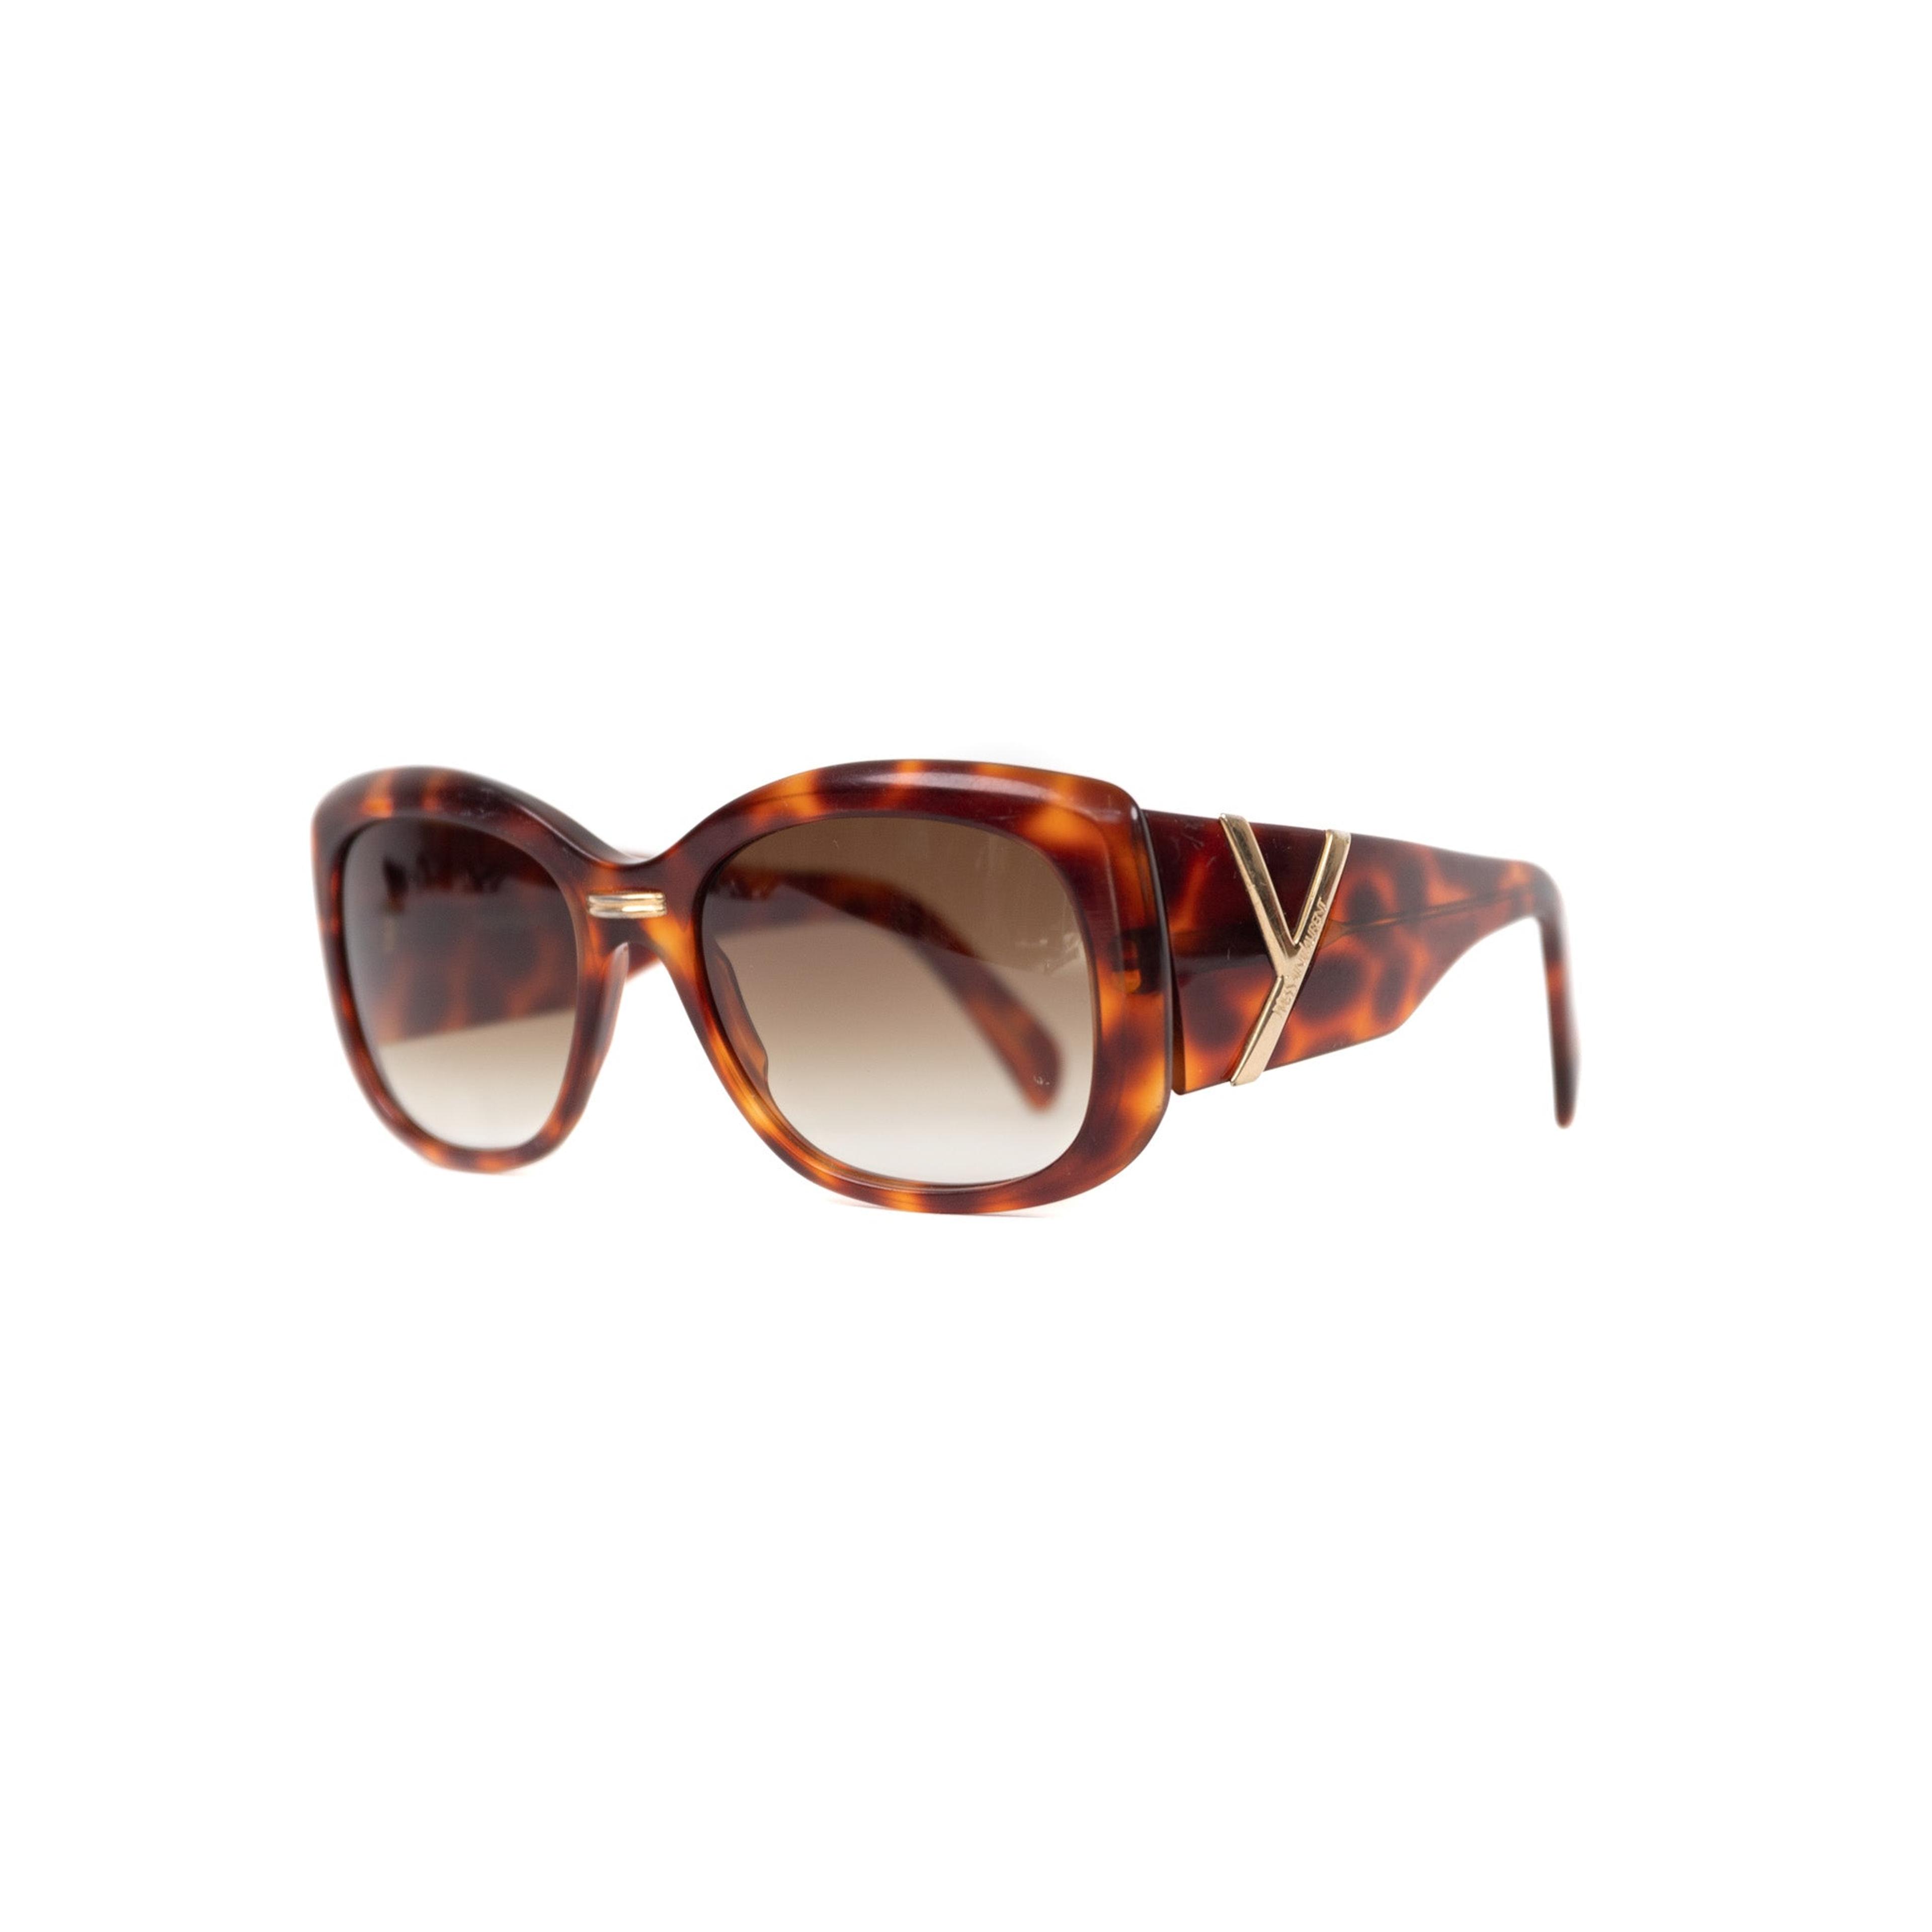 Yves Saint Laurent Tortoise Sunglasses